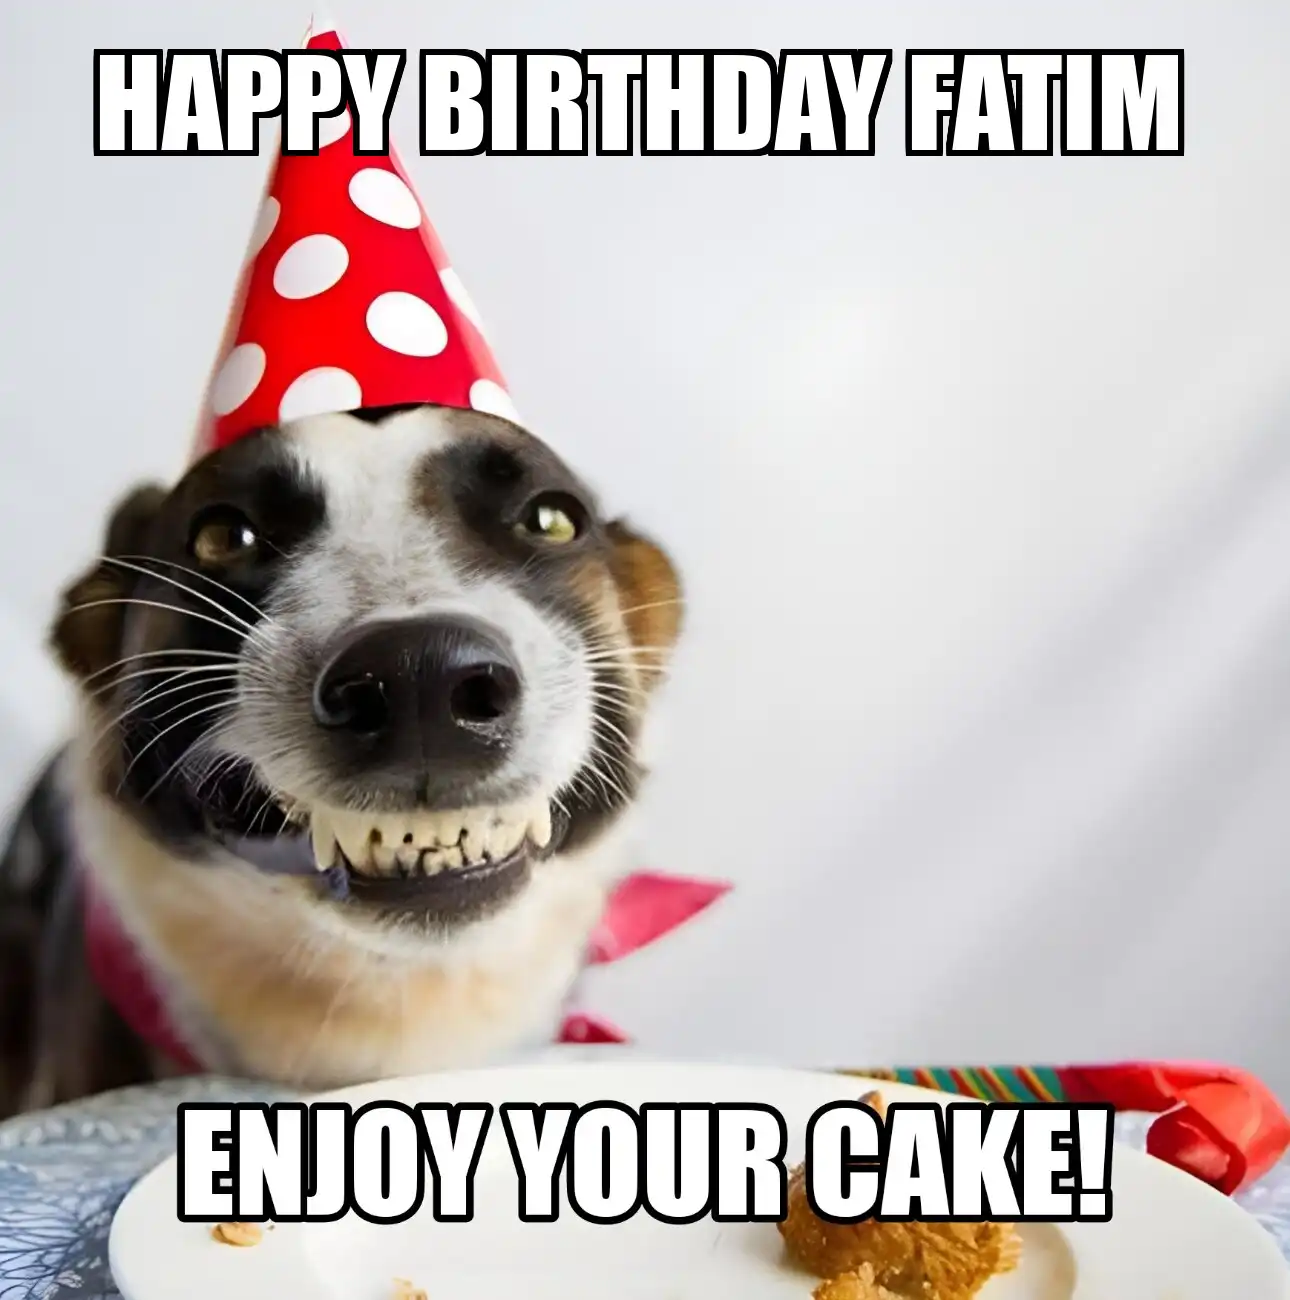 Happy Birthday Fatim Enjoy Your Cake Dog Meme